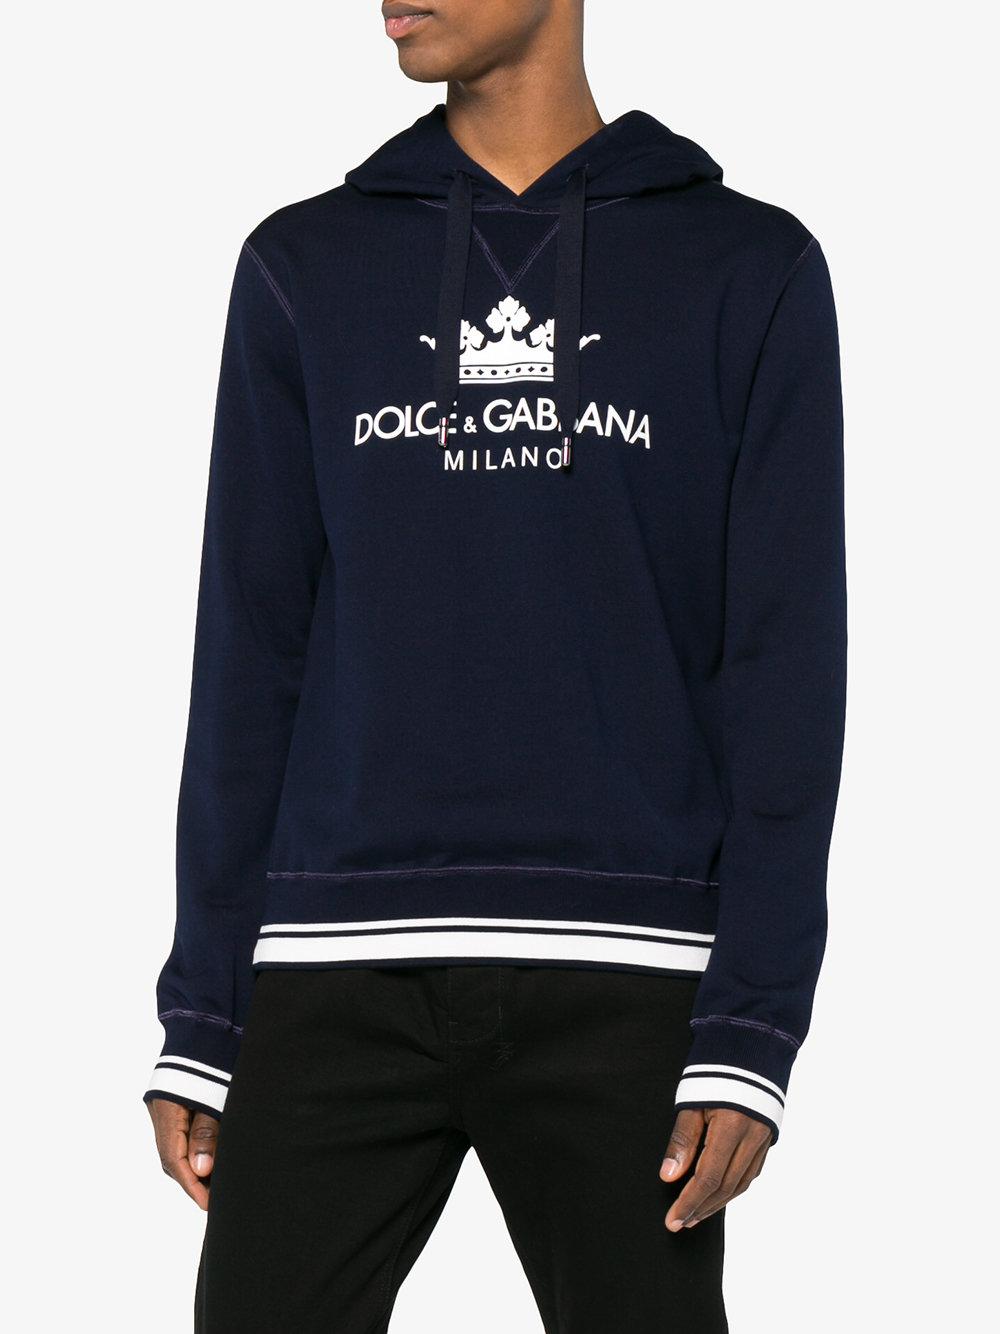 dolce and gabbana hooded sweatshirt